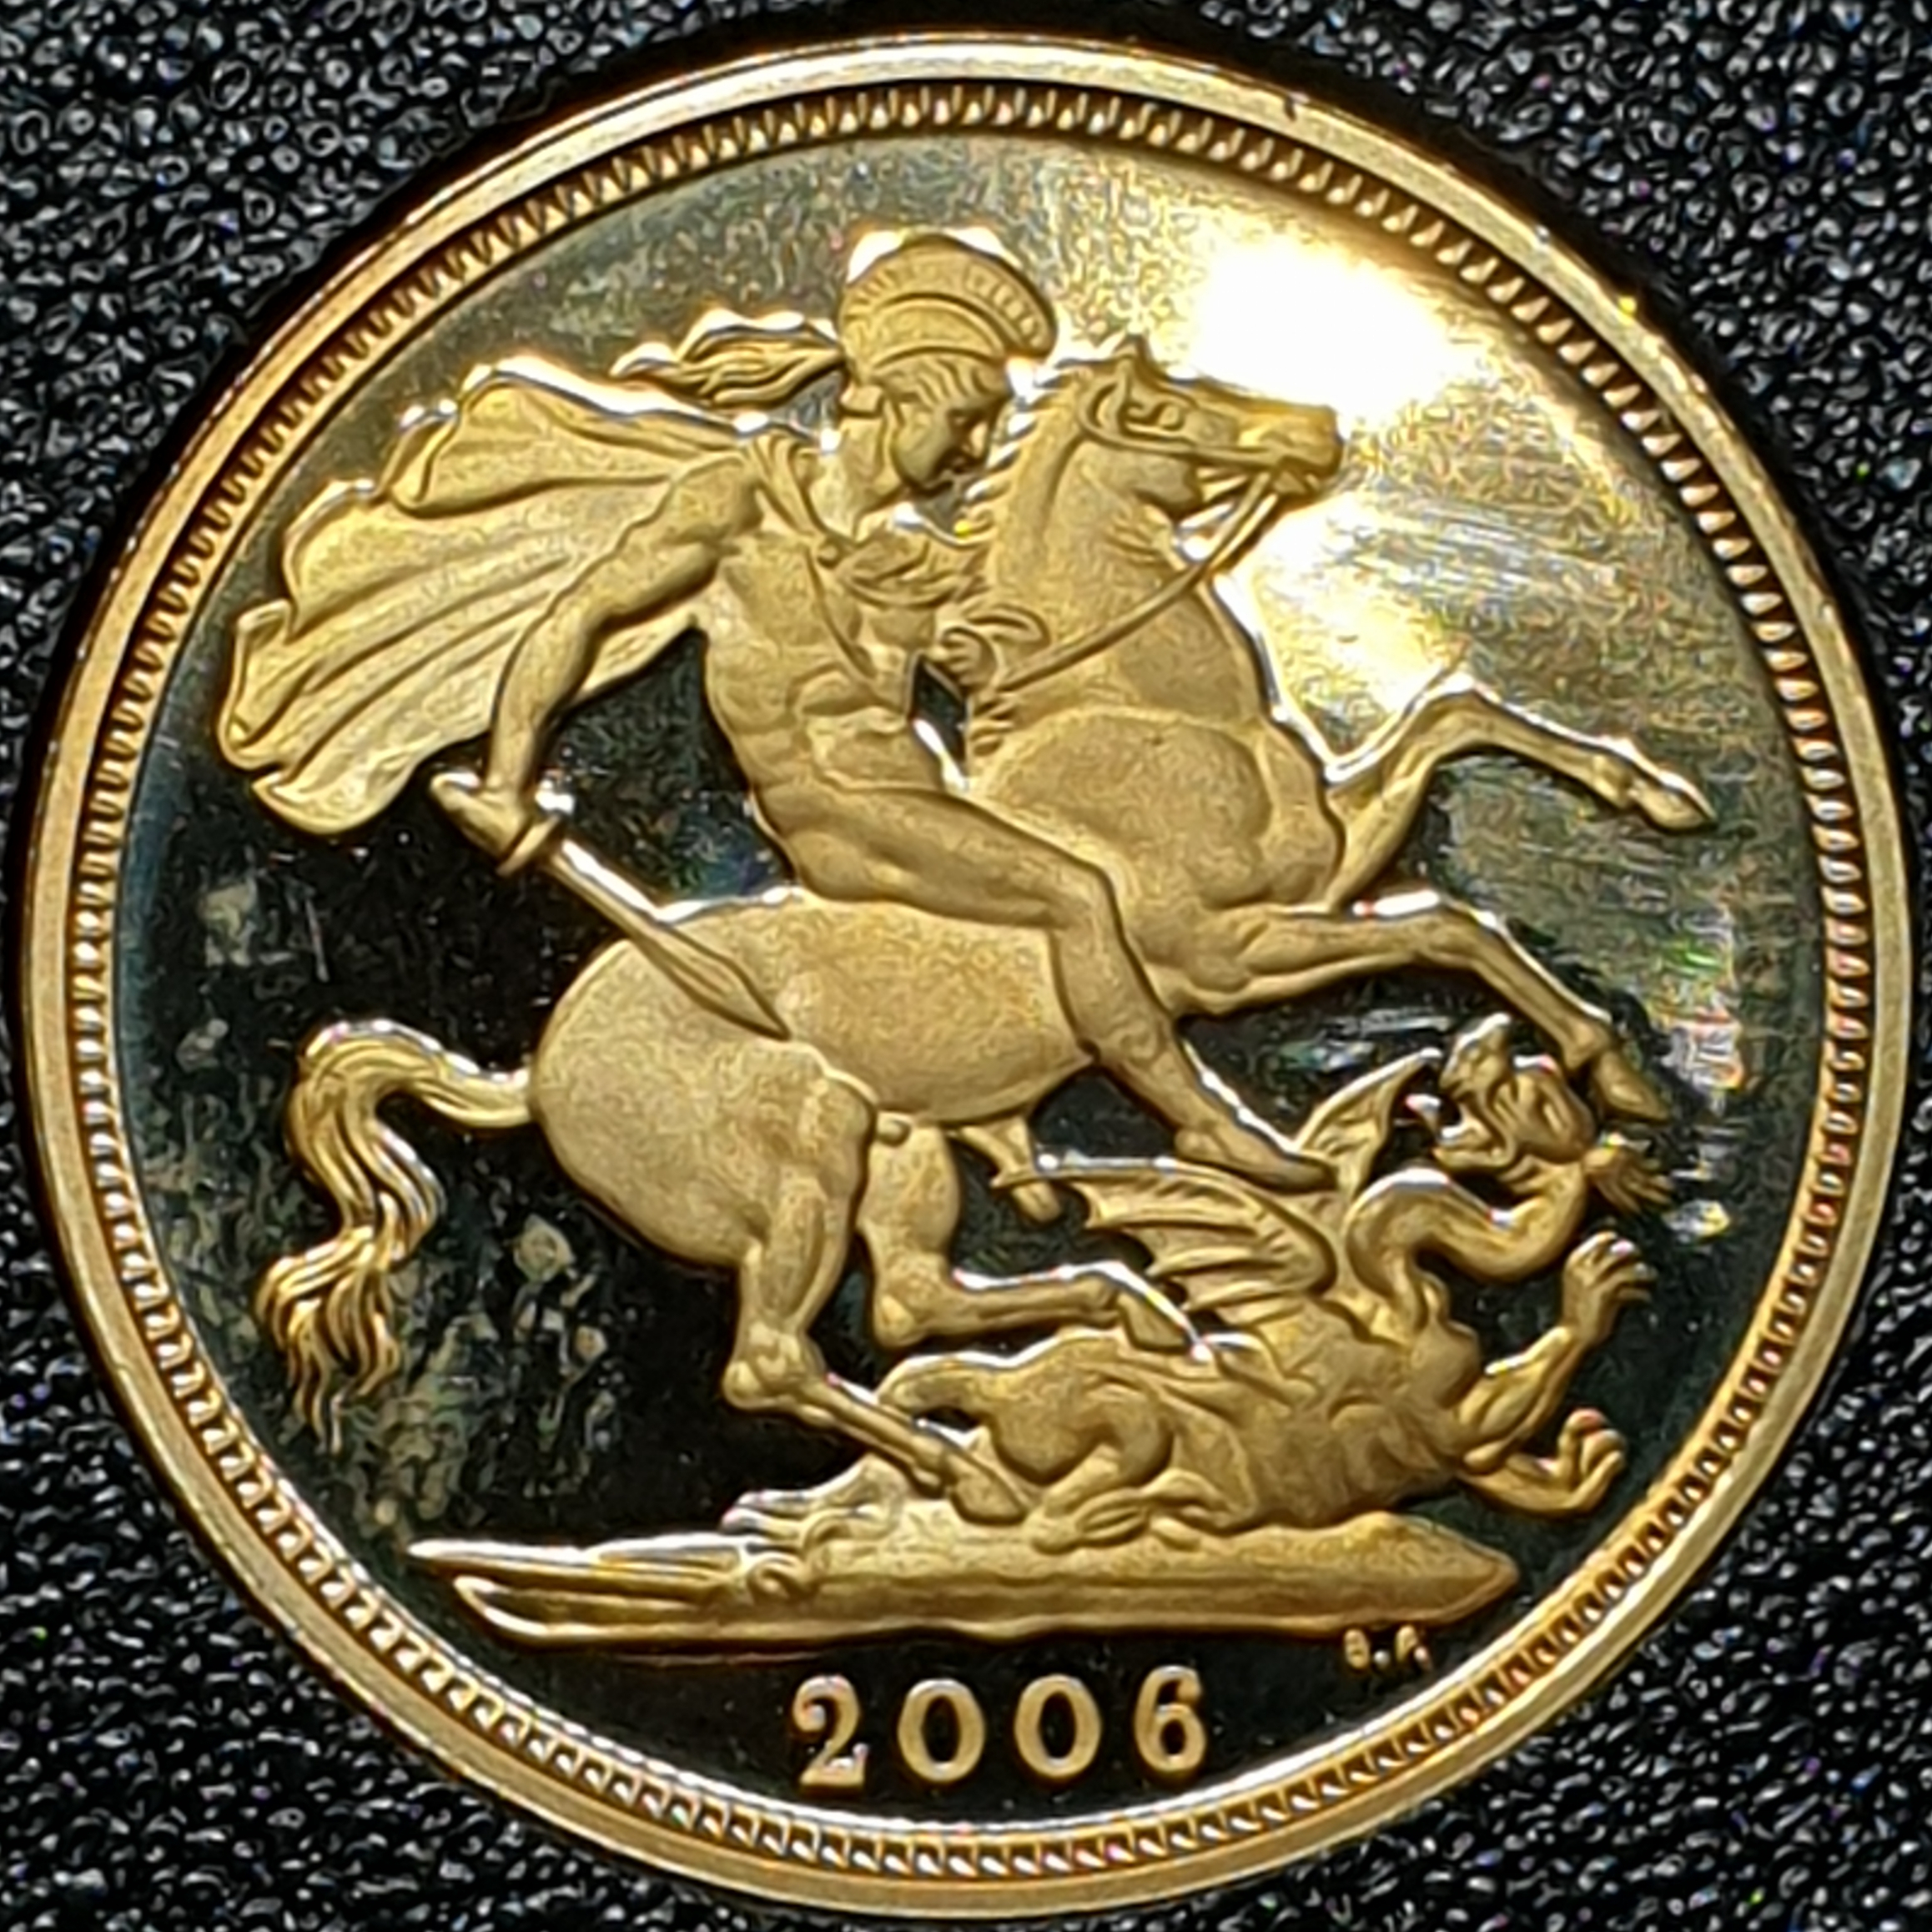 United Kingdom - 1 Sovereign - 2006 - Elizabeth II